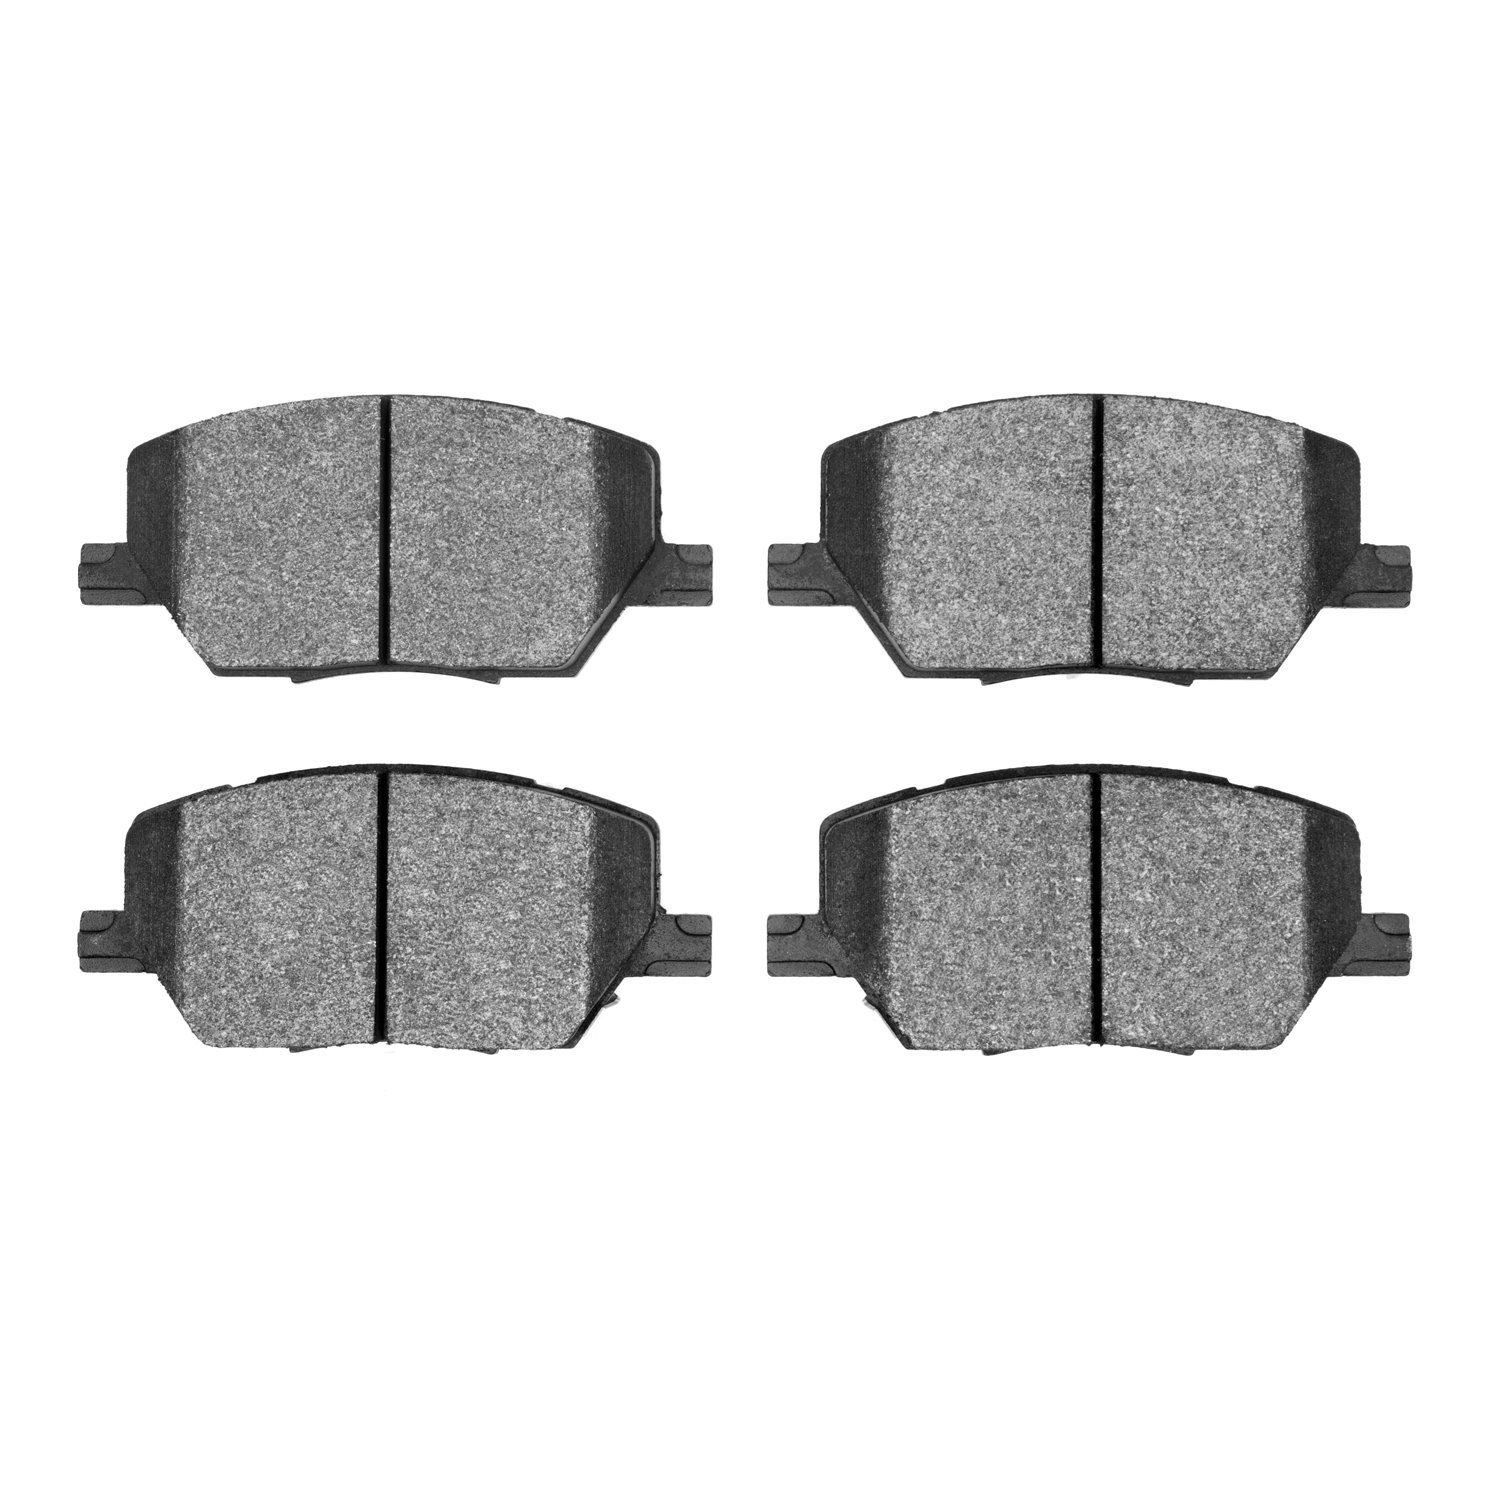 1600-1811-00 5000 Euro Ceramic Brake Pads, Fits Select Mopar, Position: Front